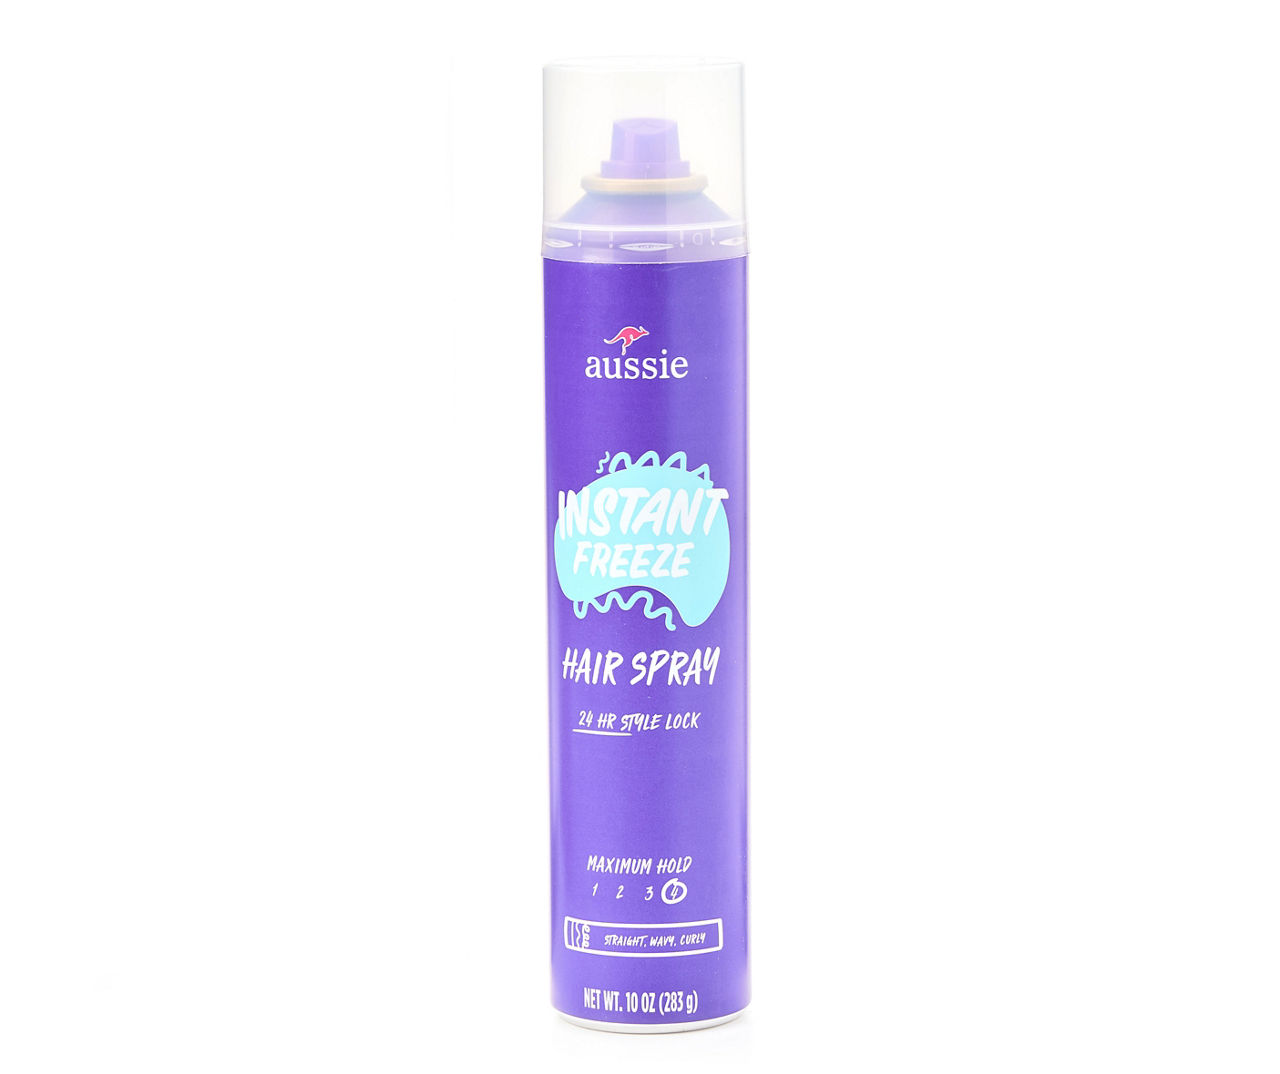 Aussie Instant Freeze Hairspray - Original Formula 10 oz